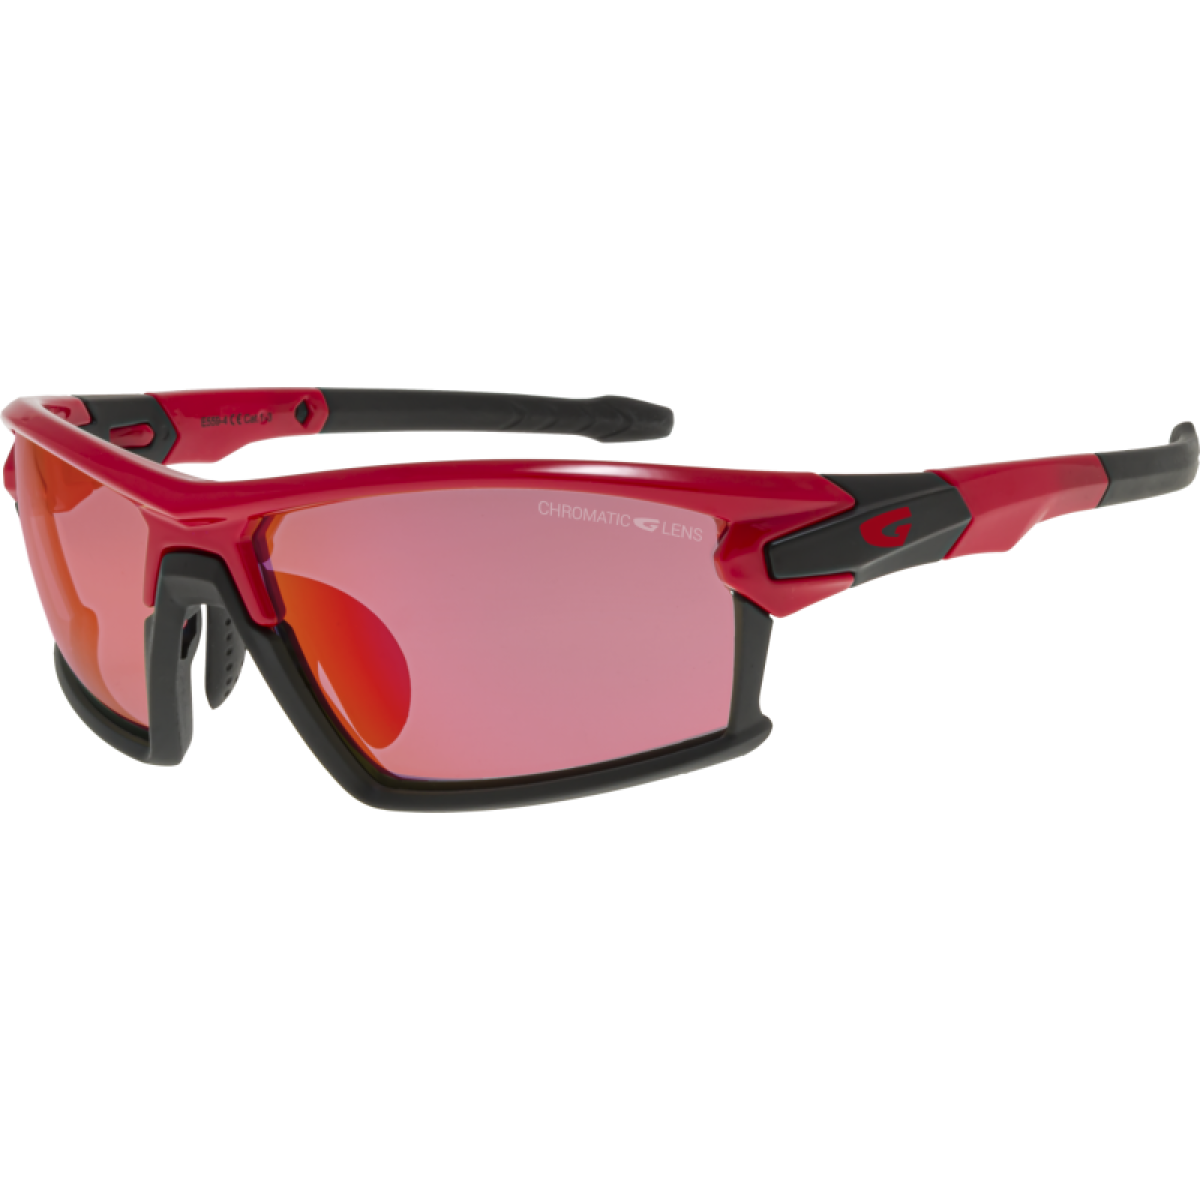 Photochromatic sunglasses  E559-4 GOG - view 4